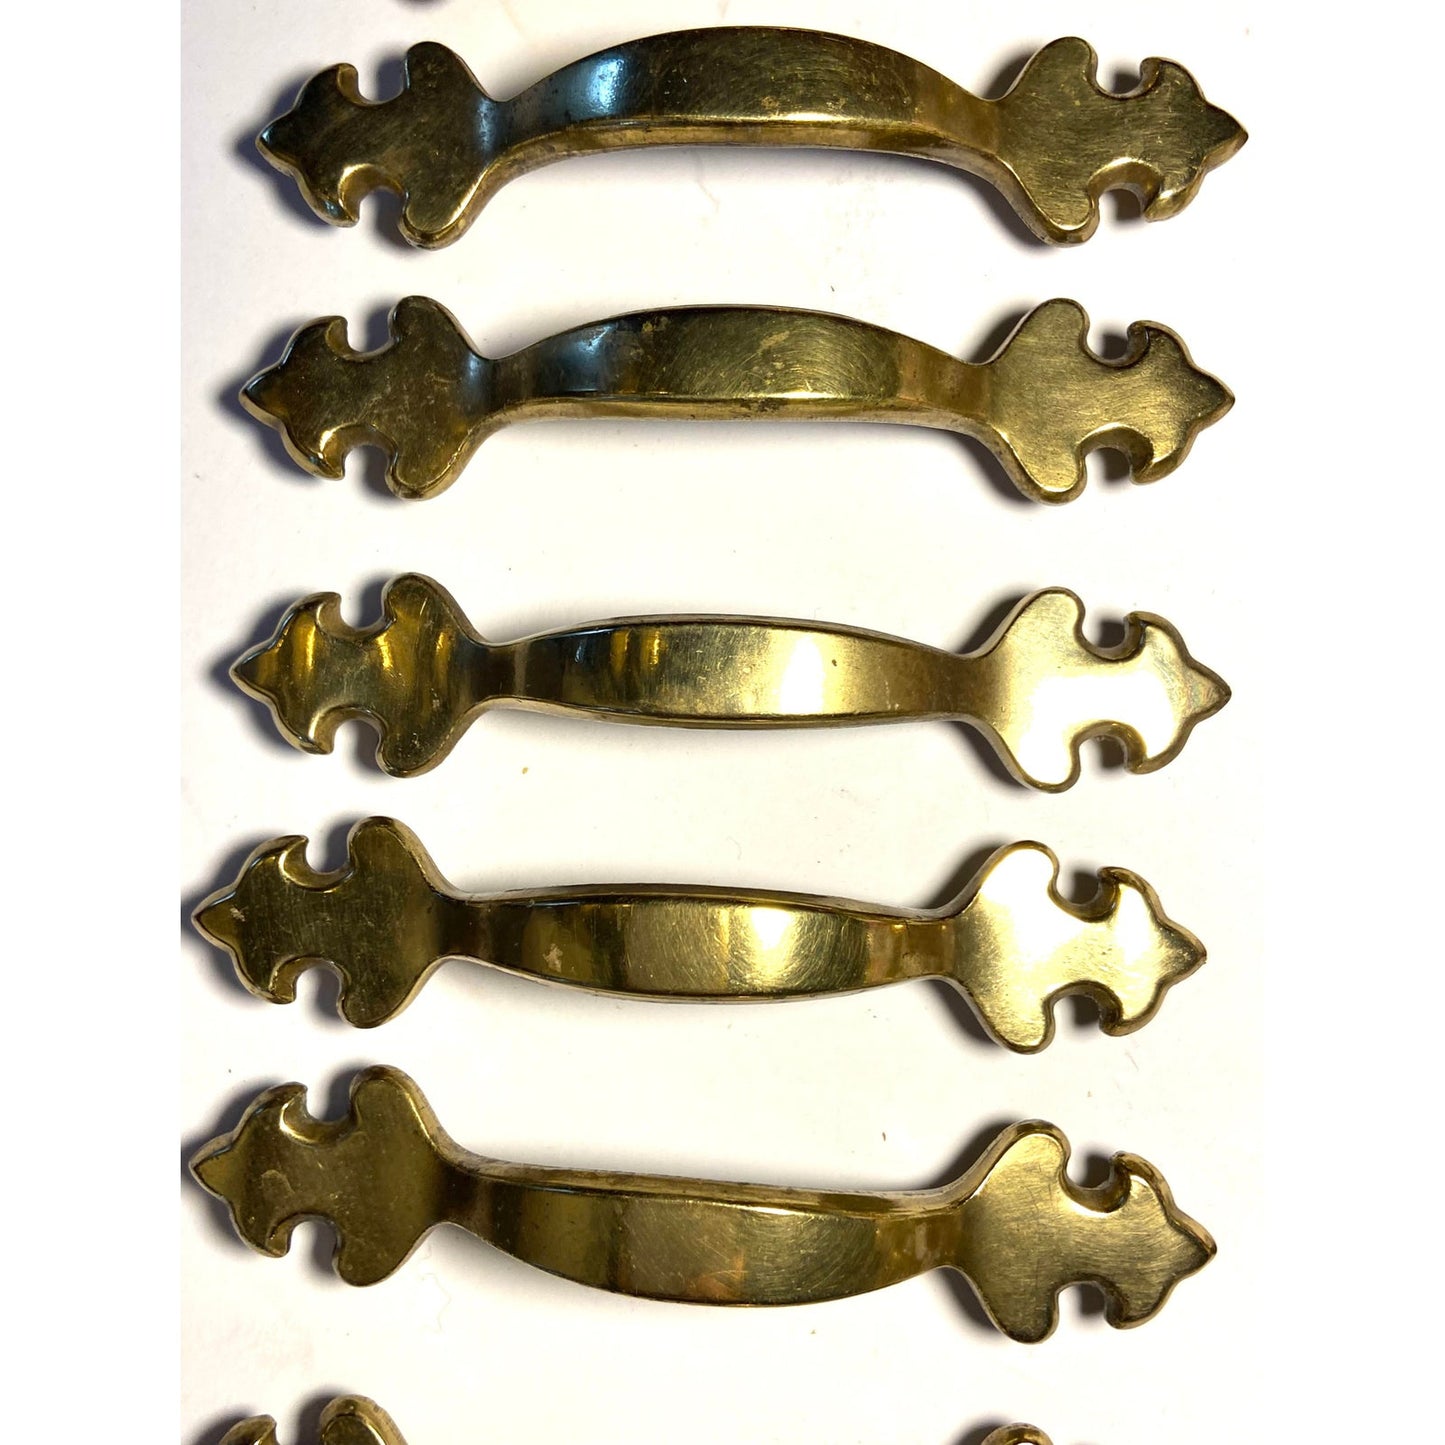 Vintage Gold Brass Handle Pulls - 20 Pieces